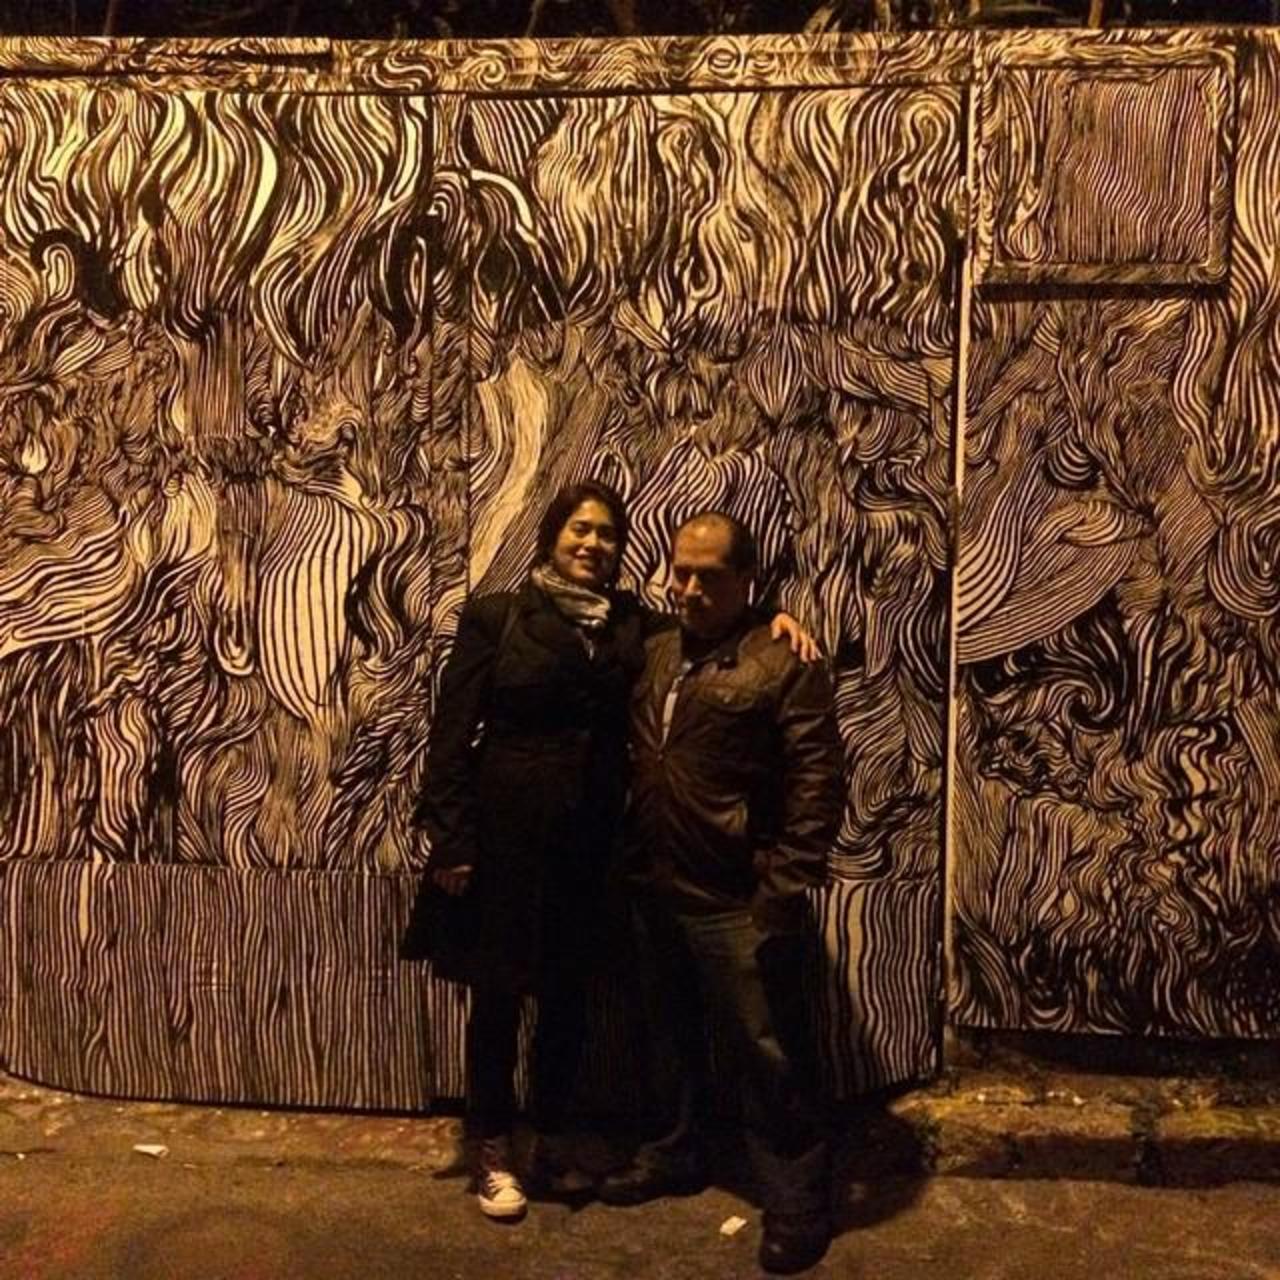 #Mural #Graffiti #WallArt #SanFrancisco http://t.co/yKGvLIhlAr